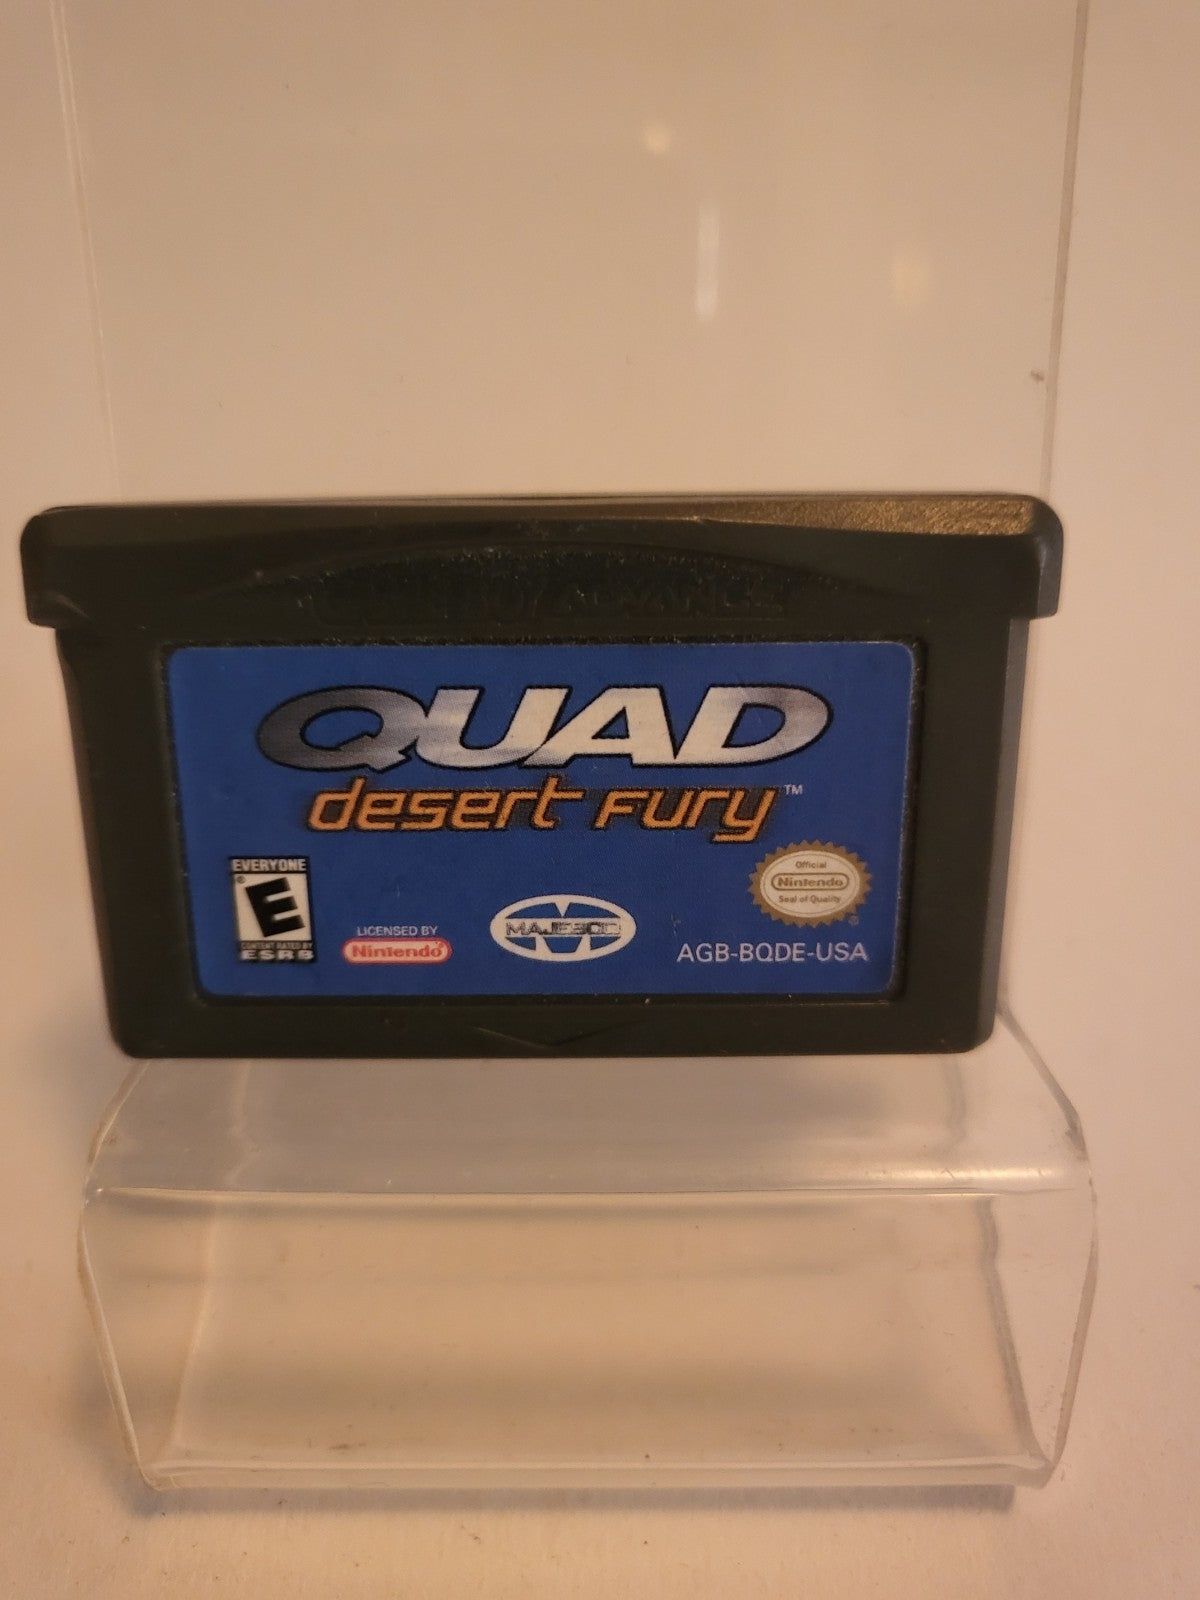 Quad Desert Fury Gameboy Advance